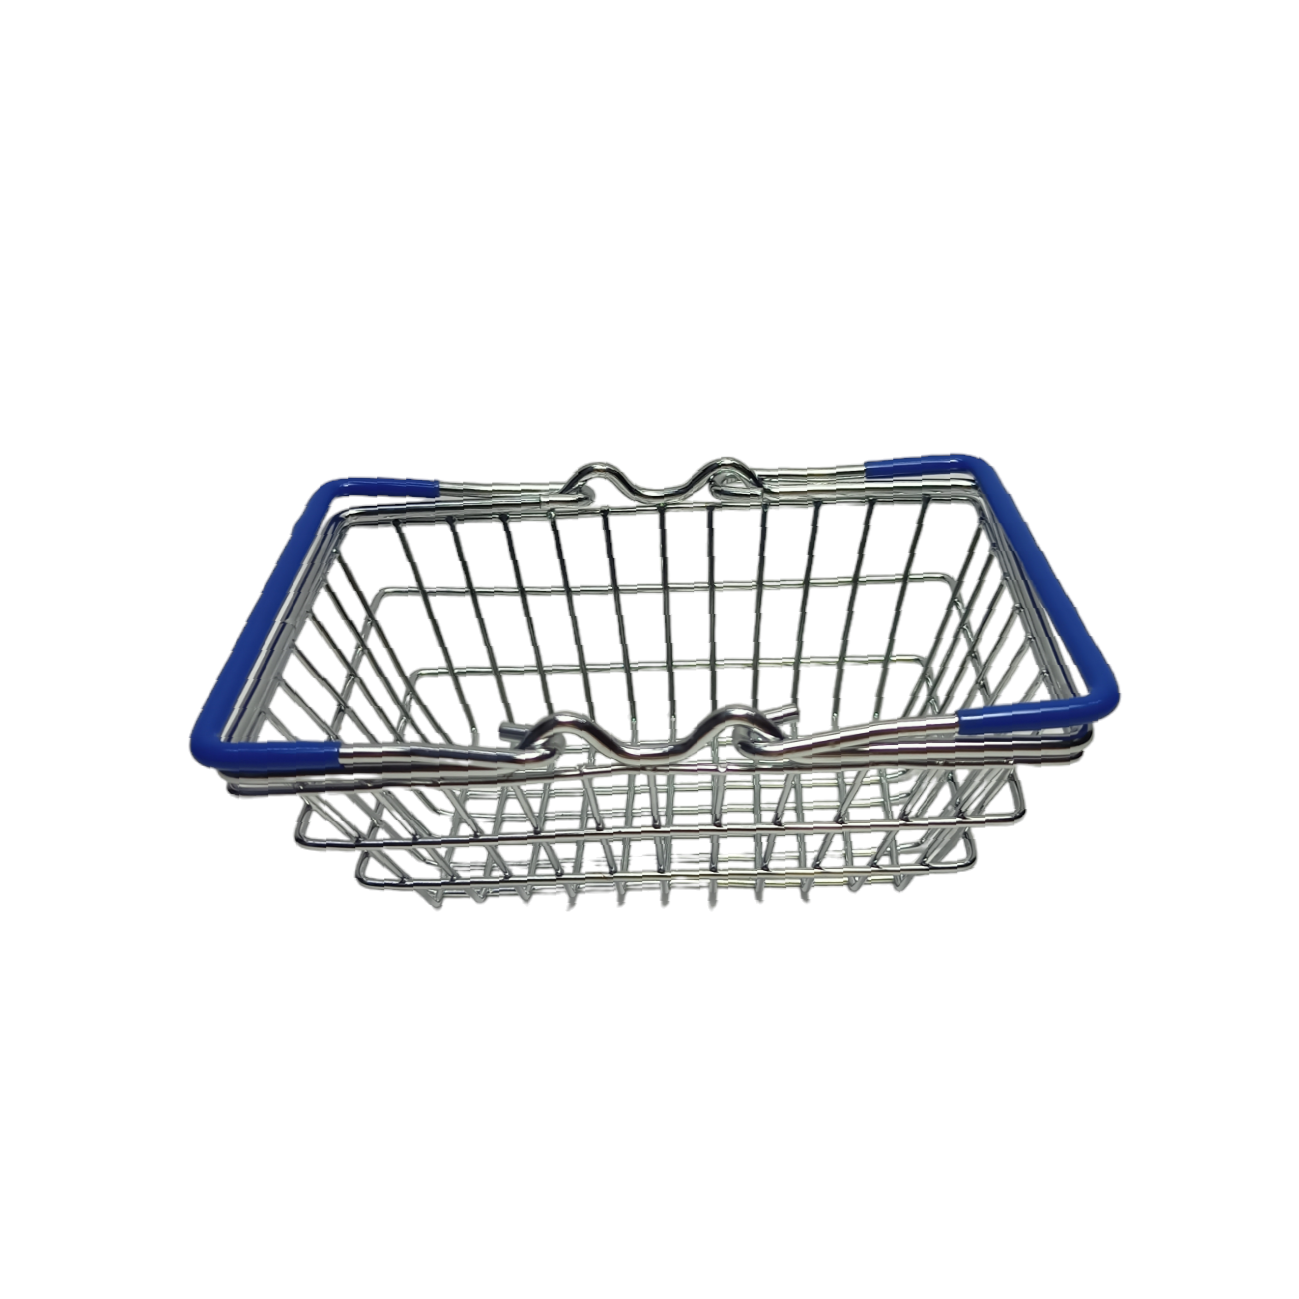 Steel Shopping Basket